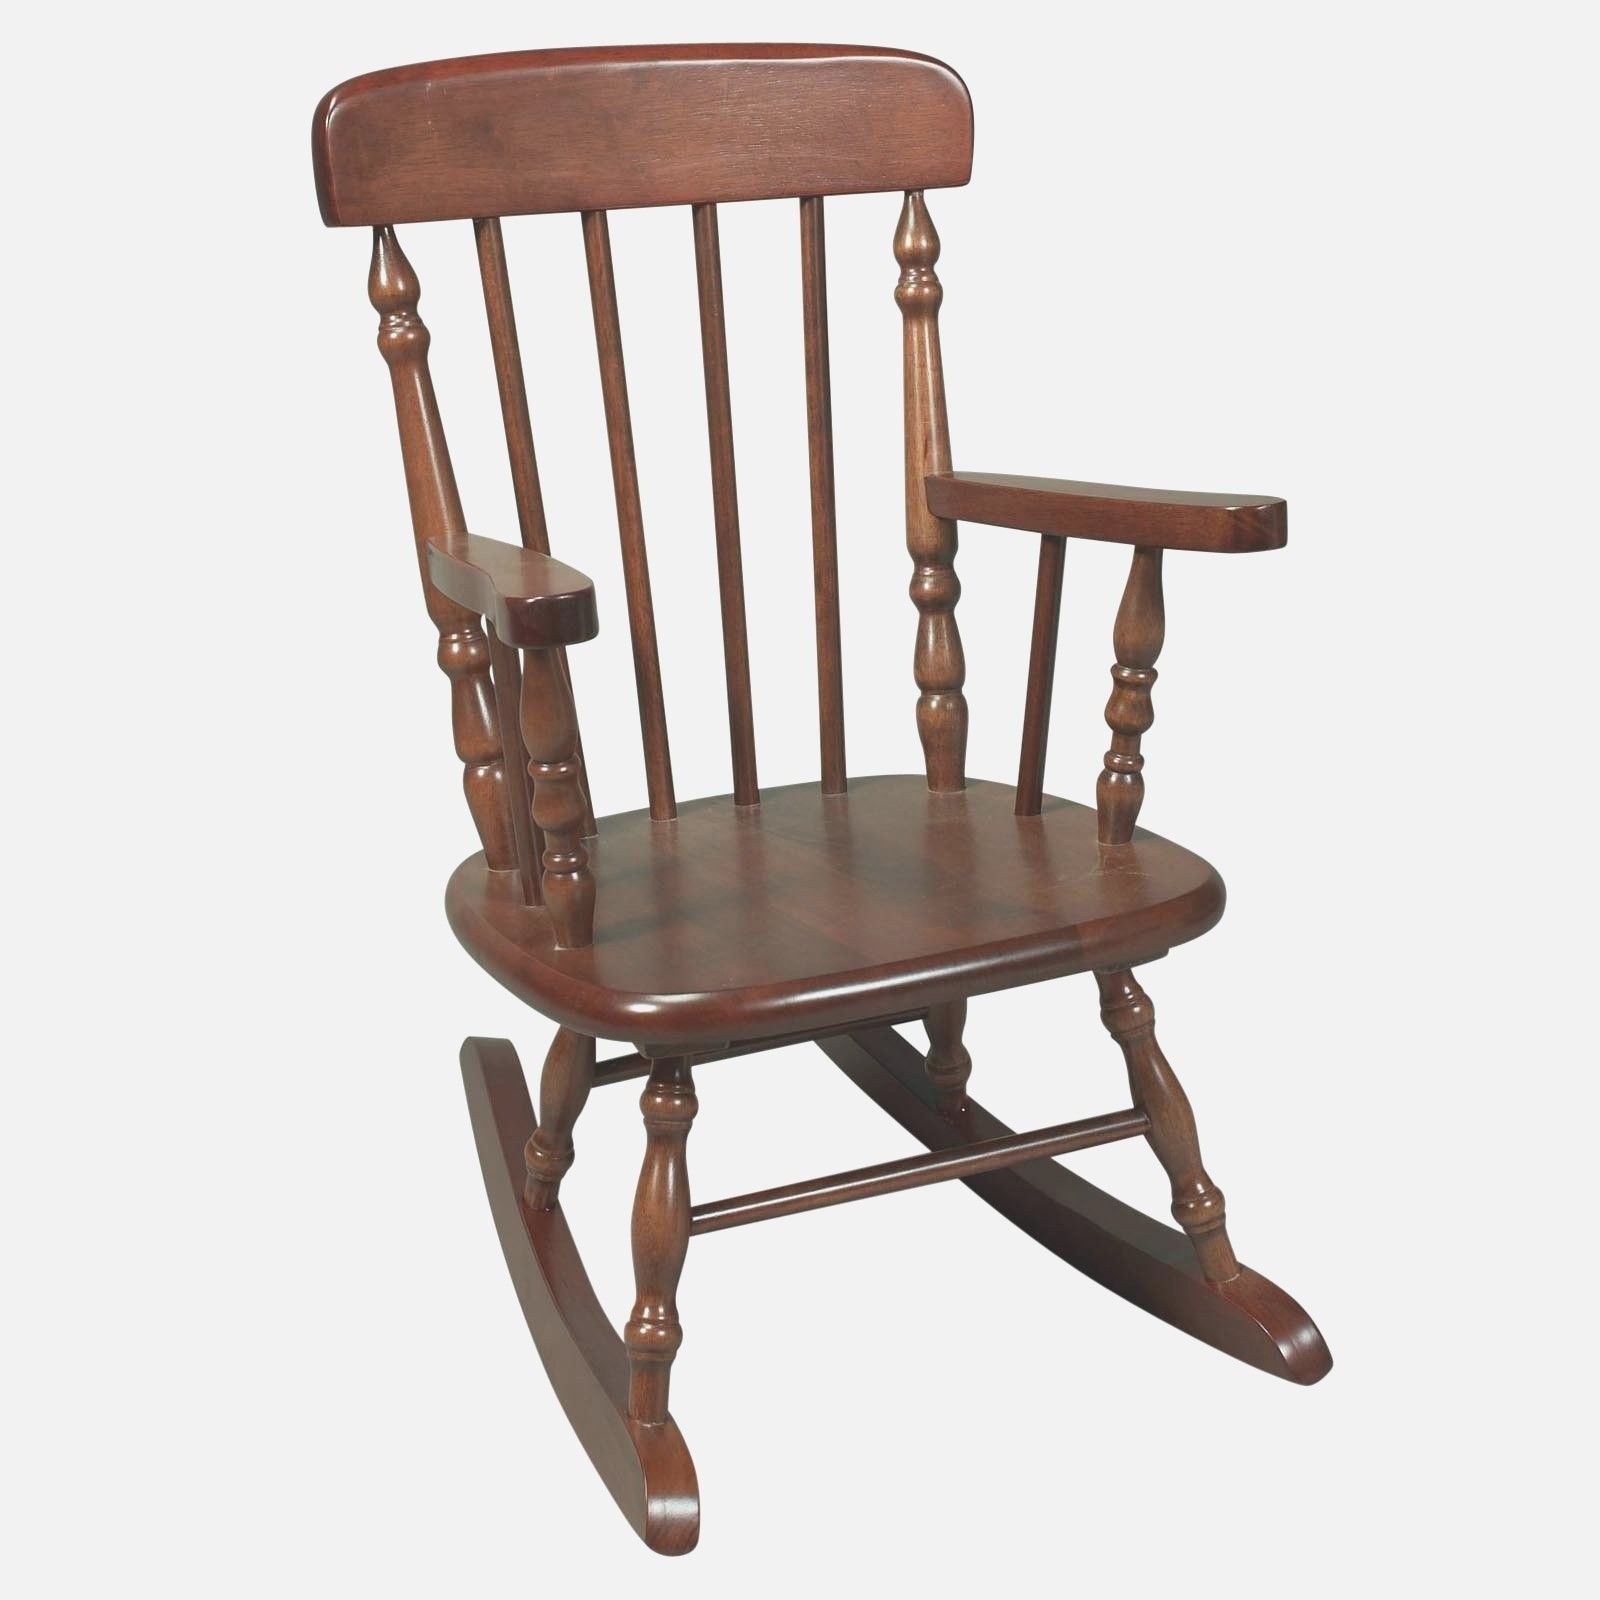 Fresh heavy duty wooden rocking chairs decor design